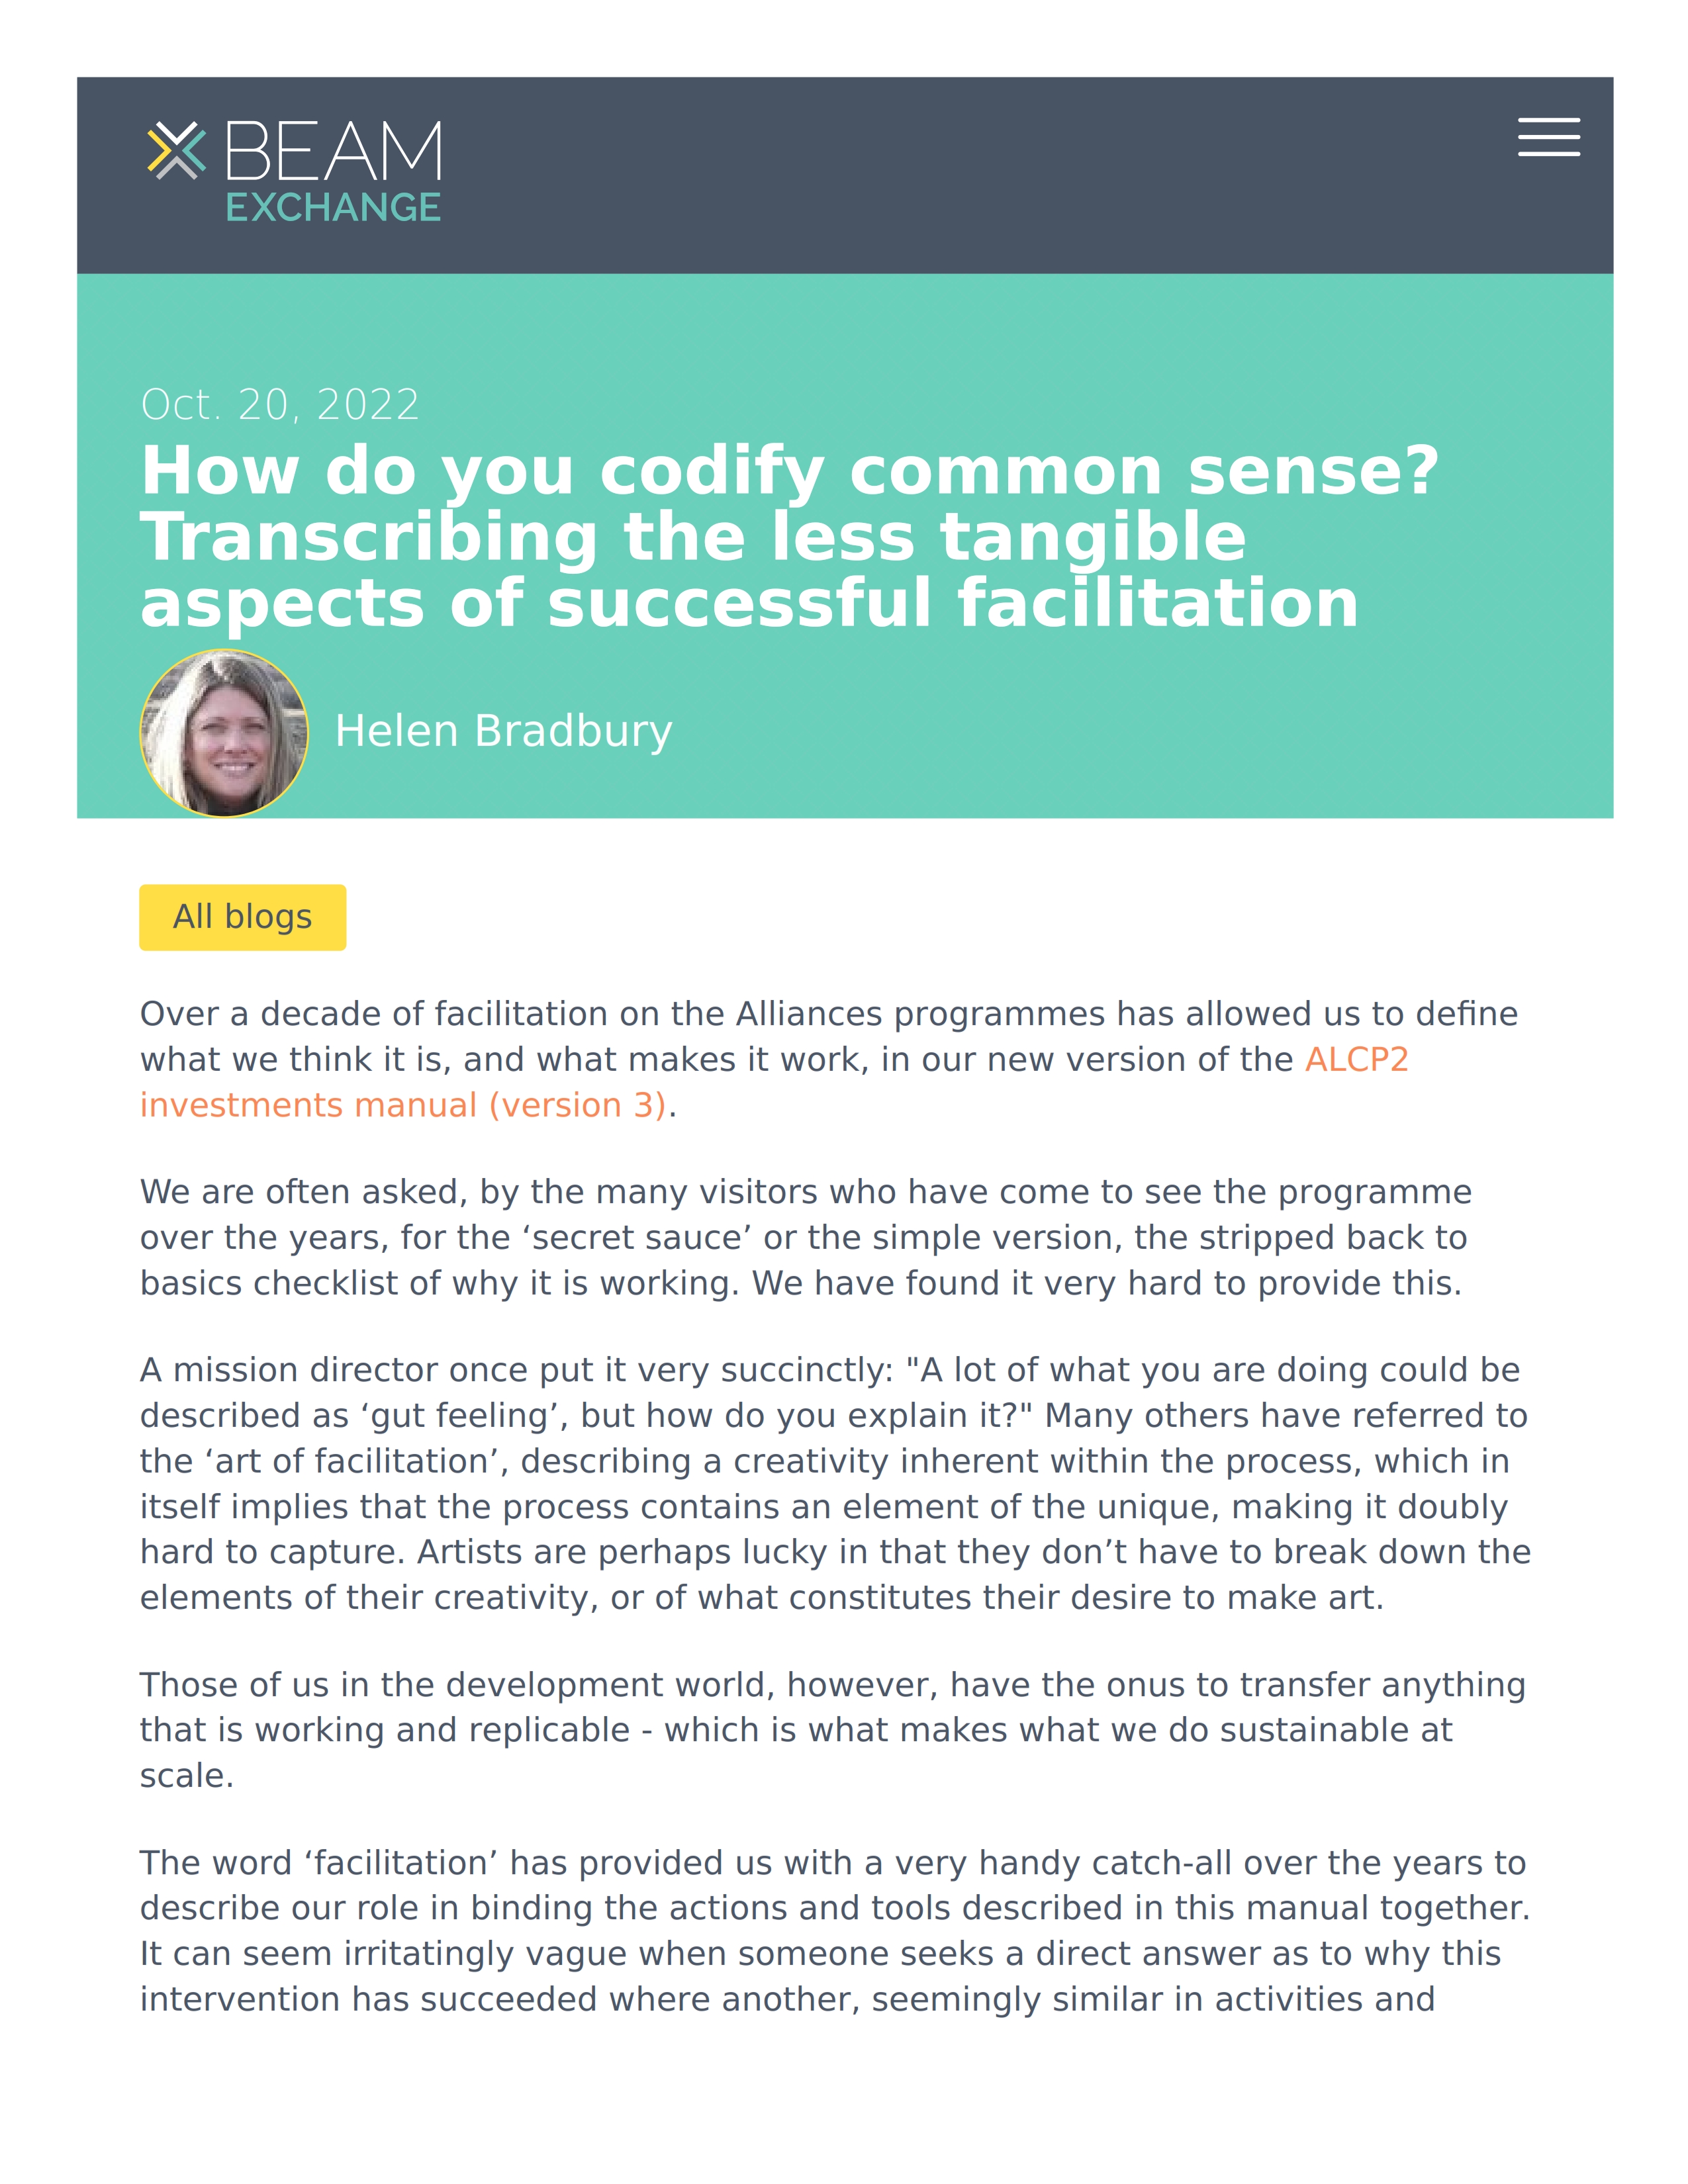 How do you codify common sense? Transcribing the less tangible aspects of successful facilitation